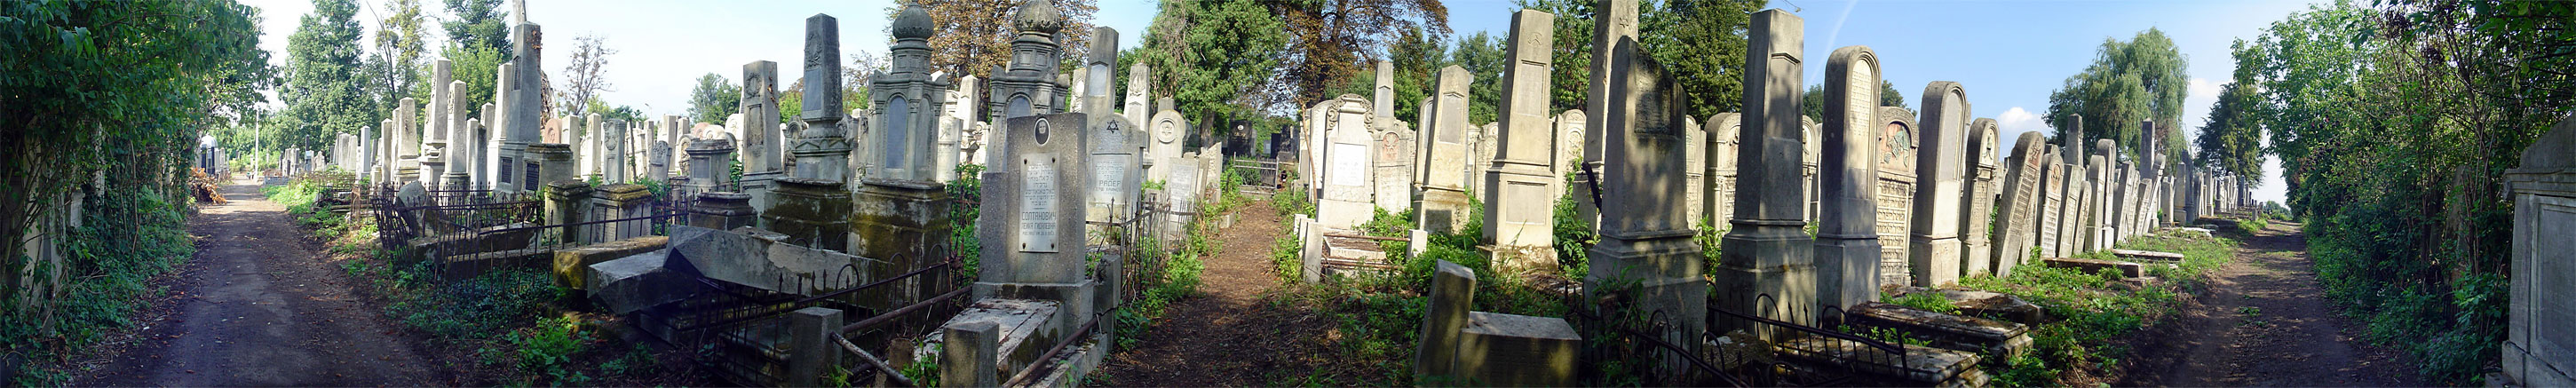 Czernowitz Jewish cemetery